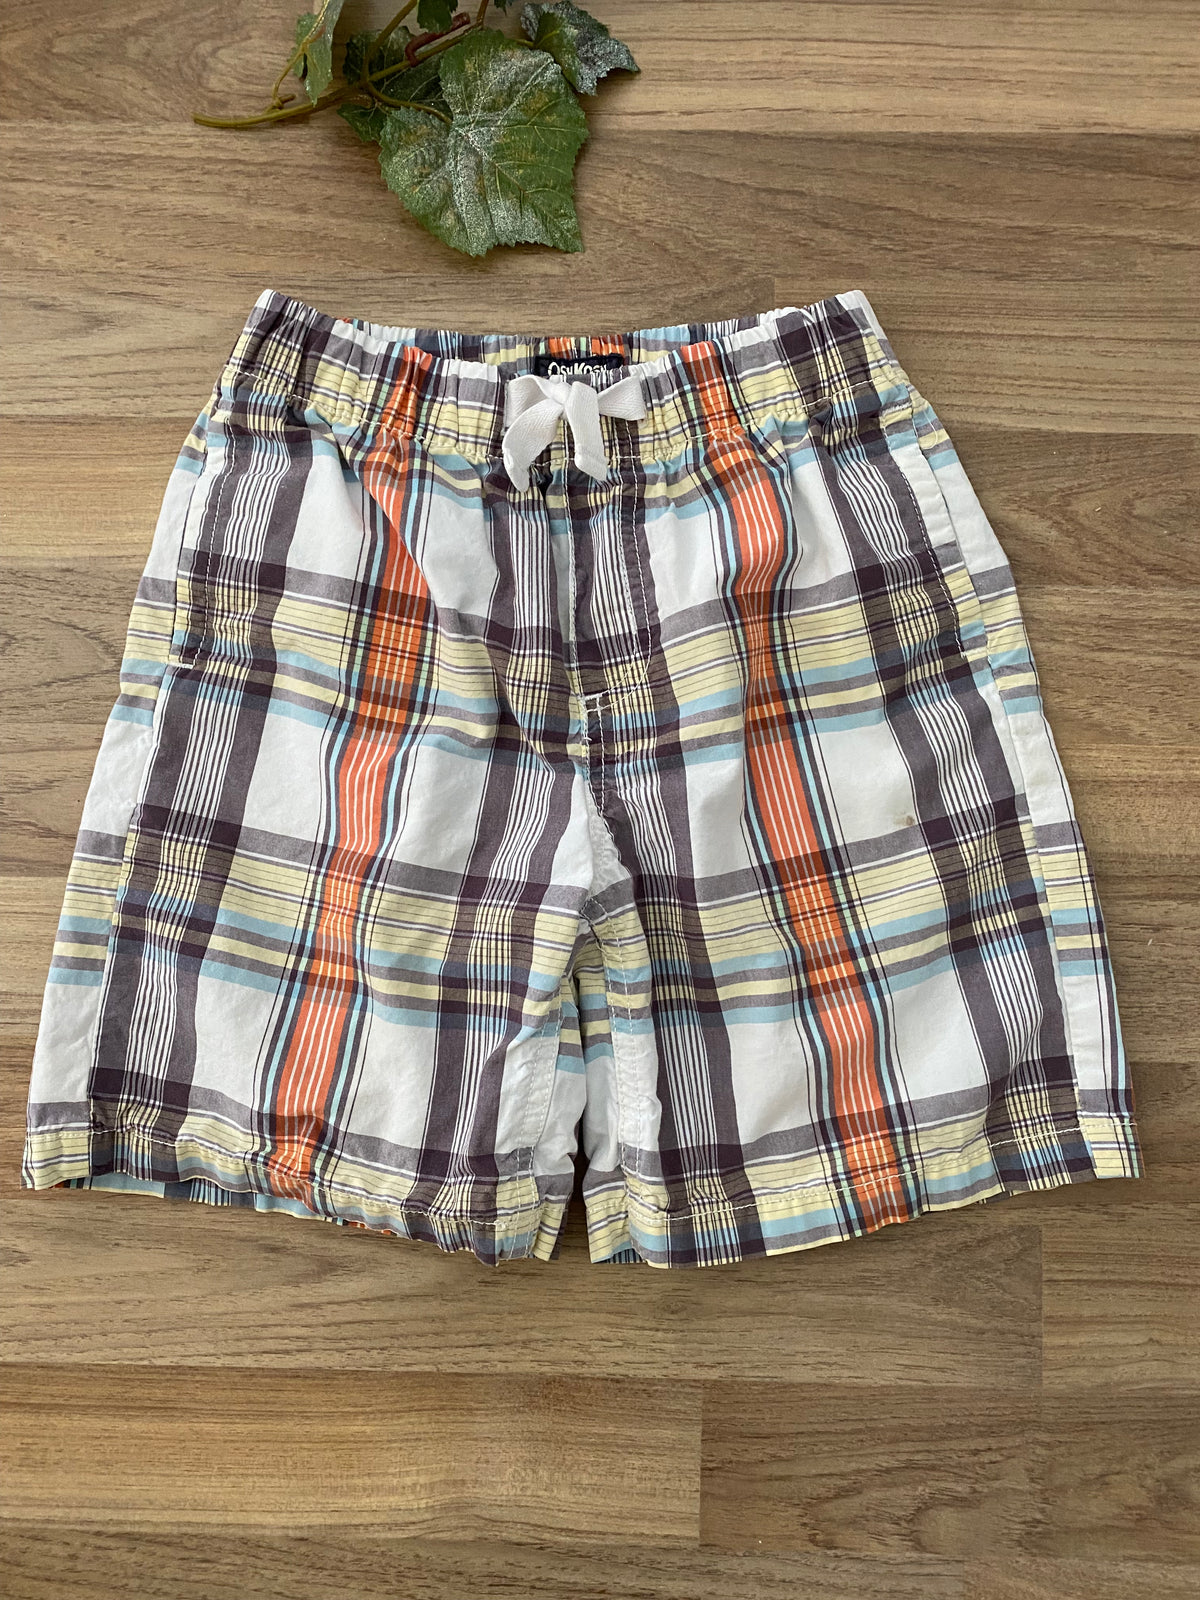 Shorts (Boys Size 6)